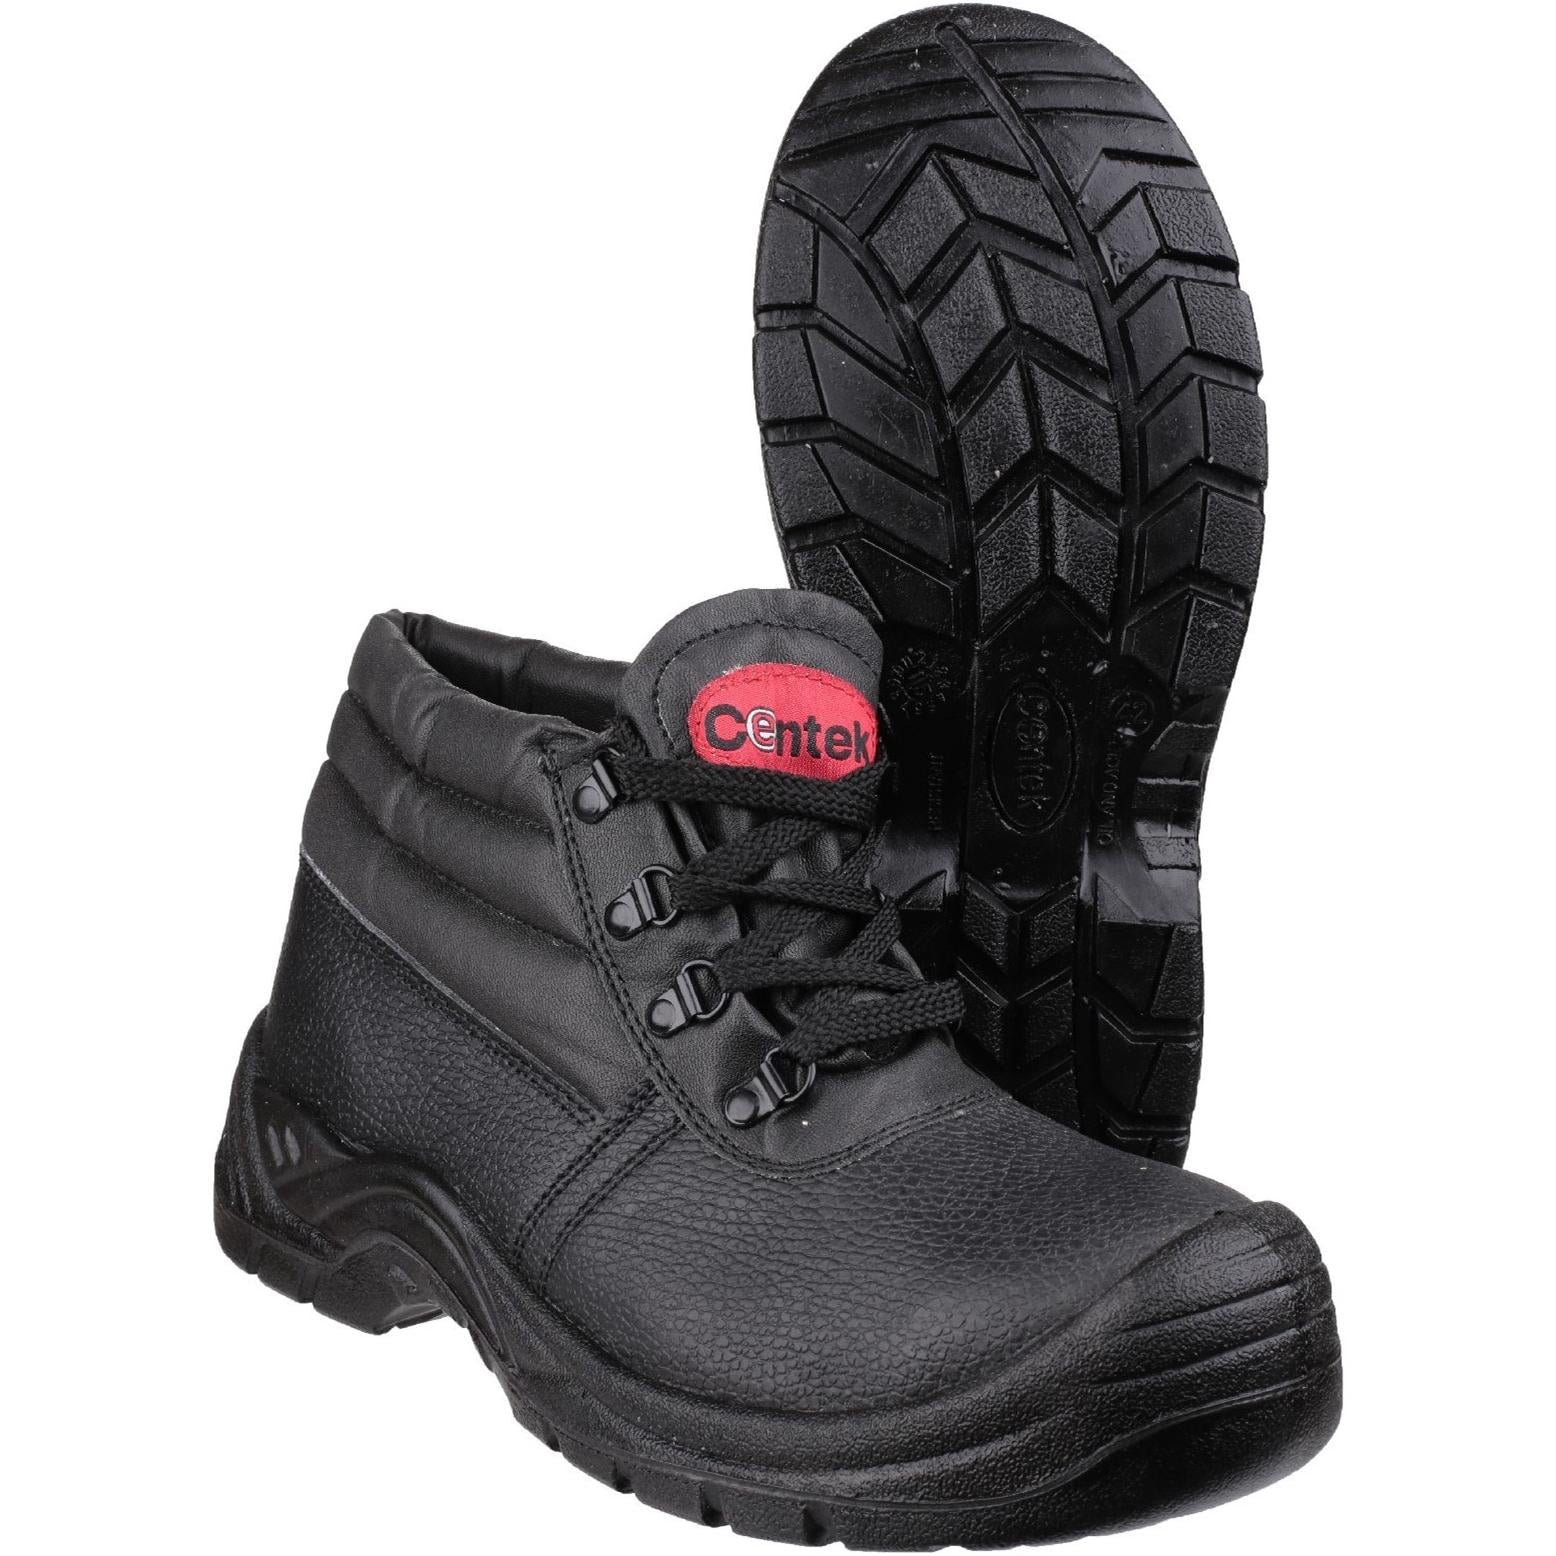 Centek FS83 Safety Boot